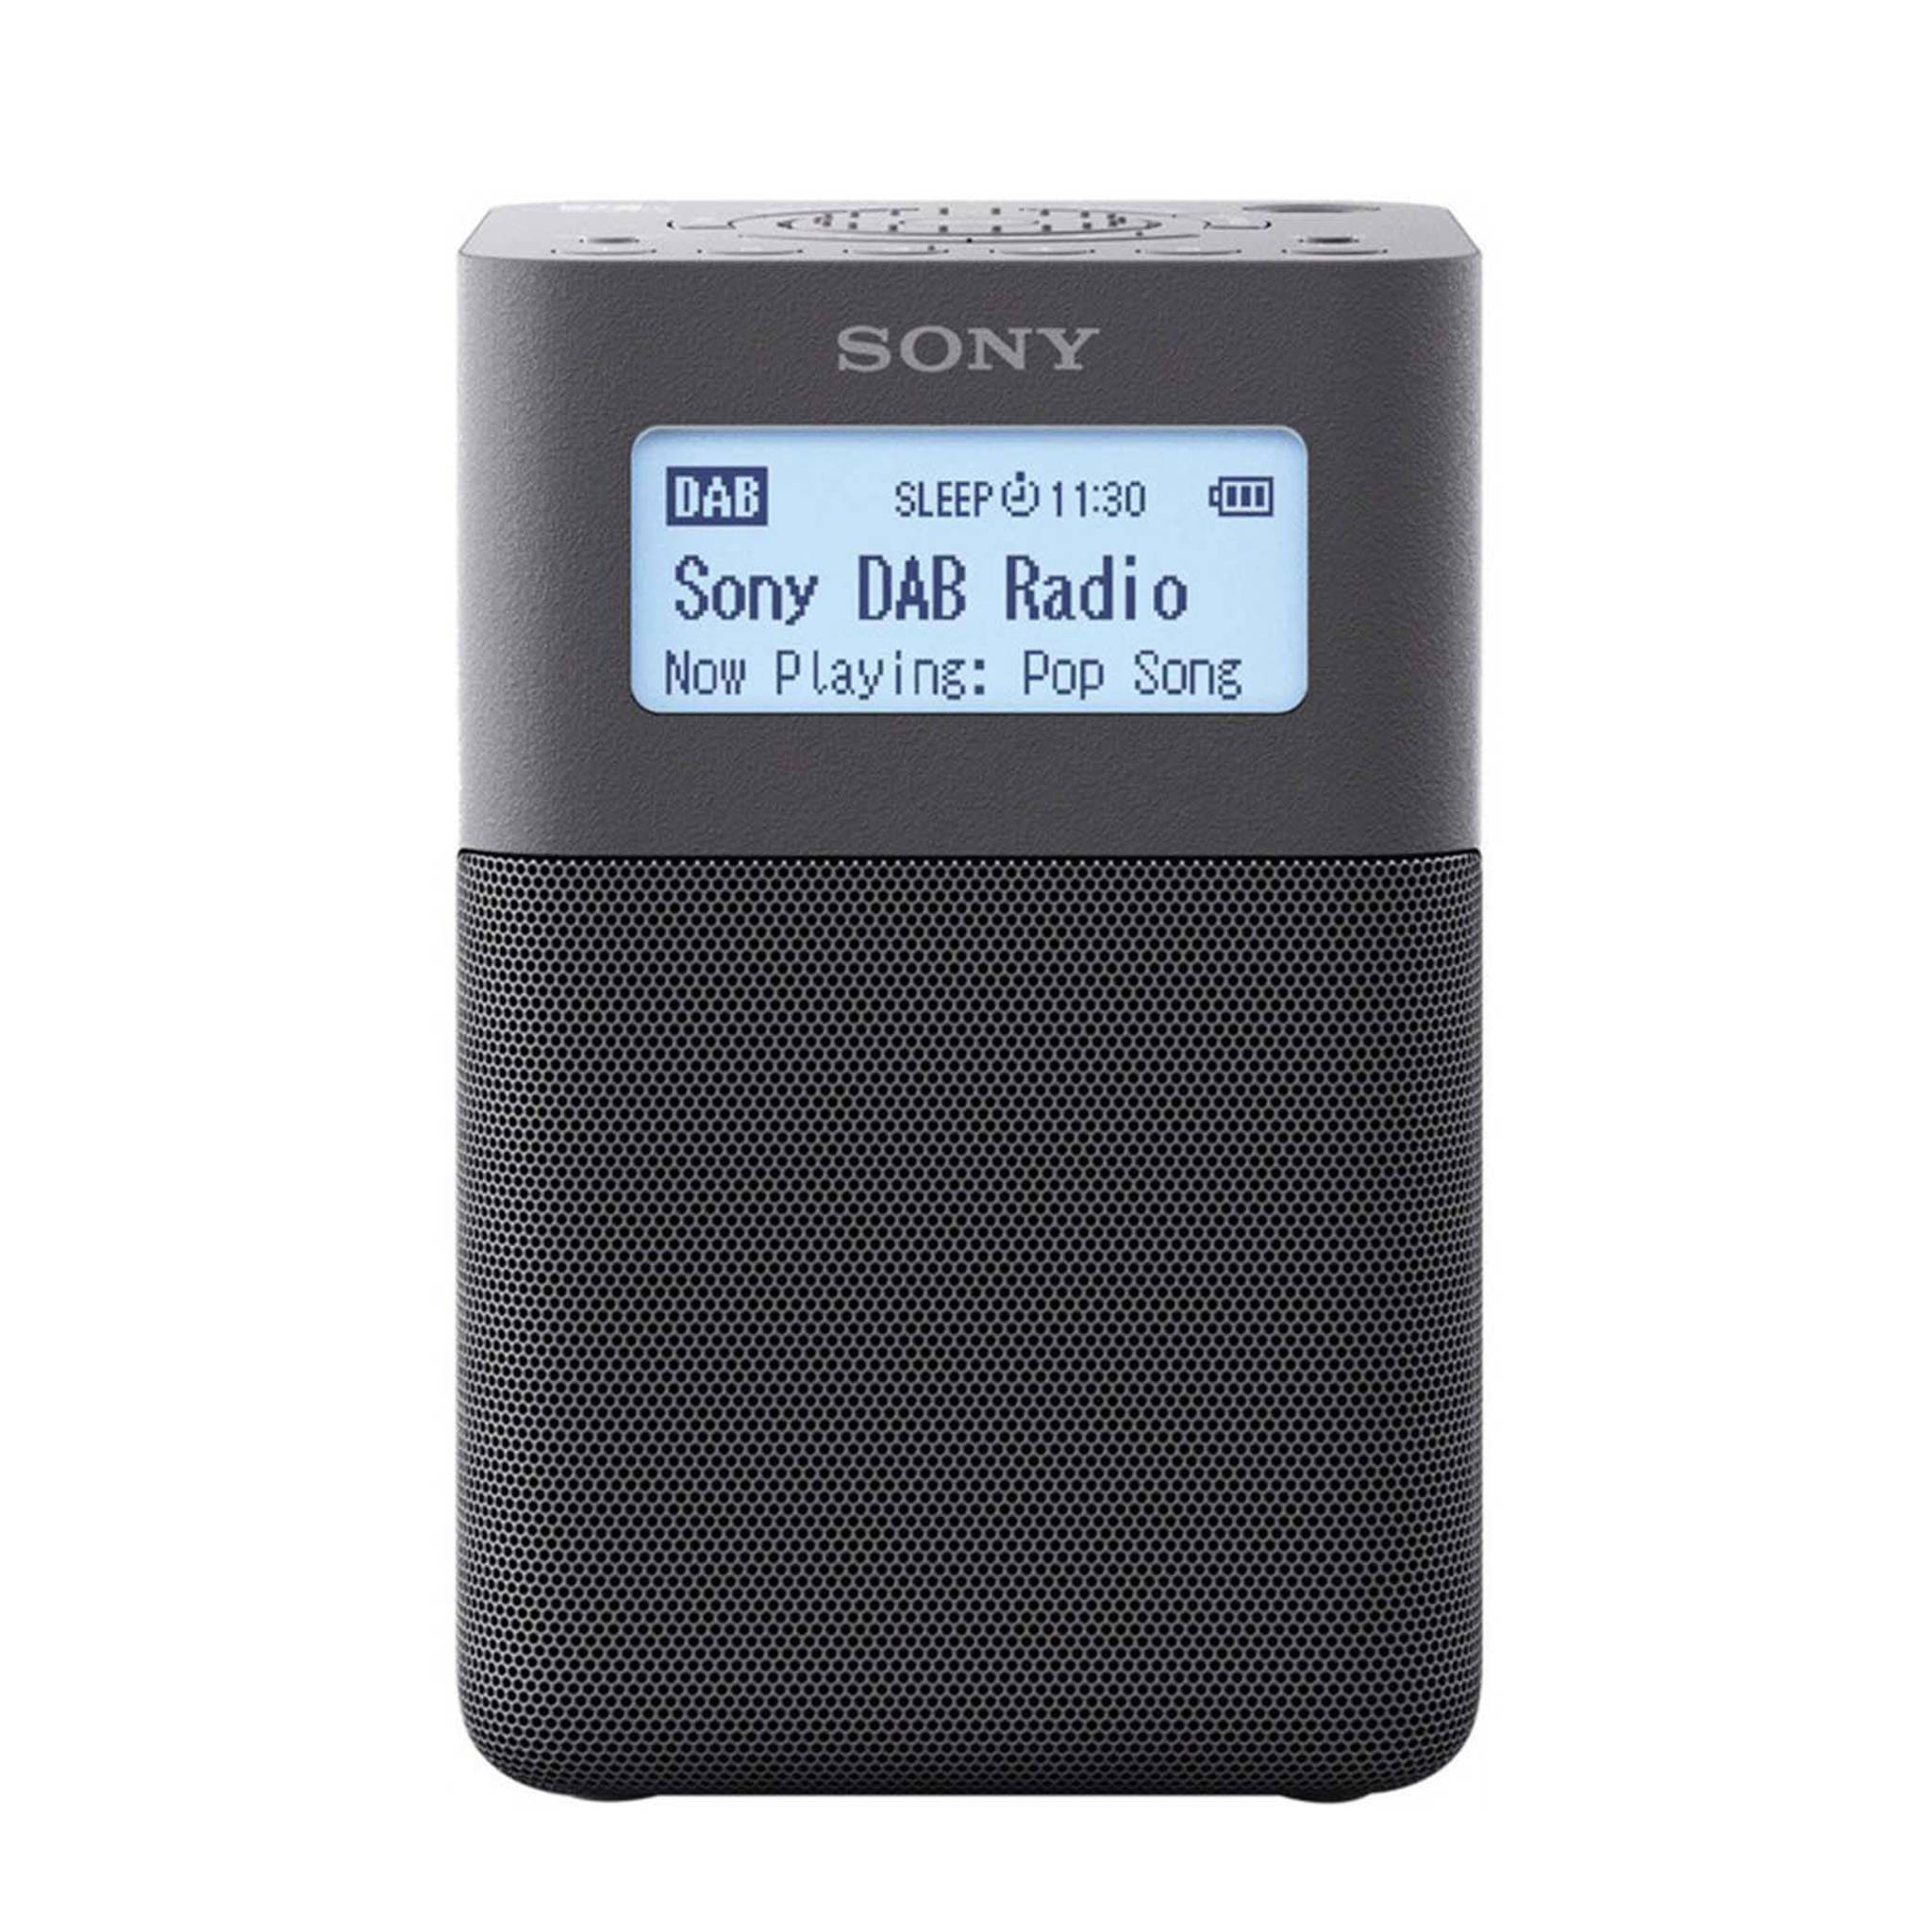 Impasse klem infrastructuur Sony XDR-V20D draagbare DAB radio grijs | wehkamp